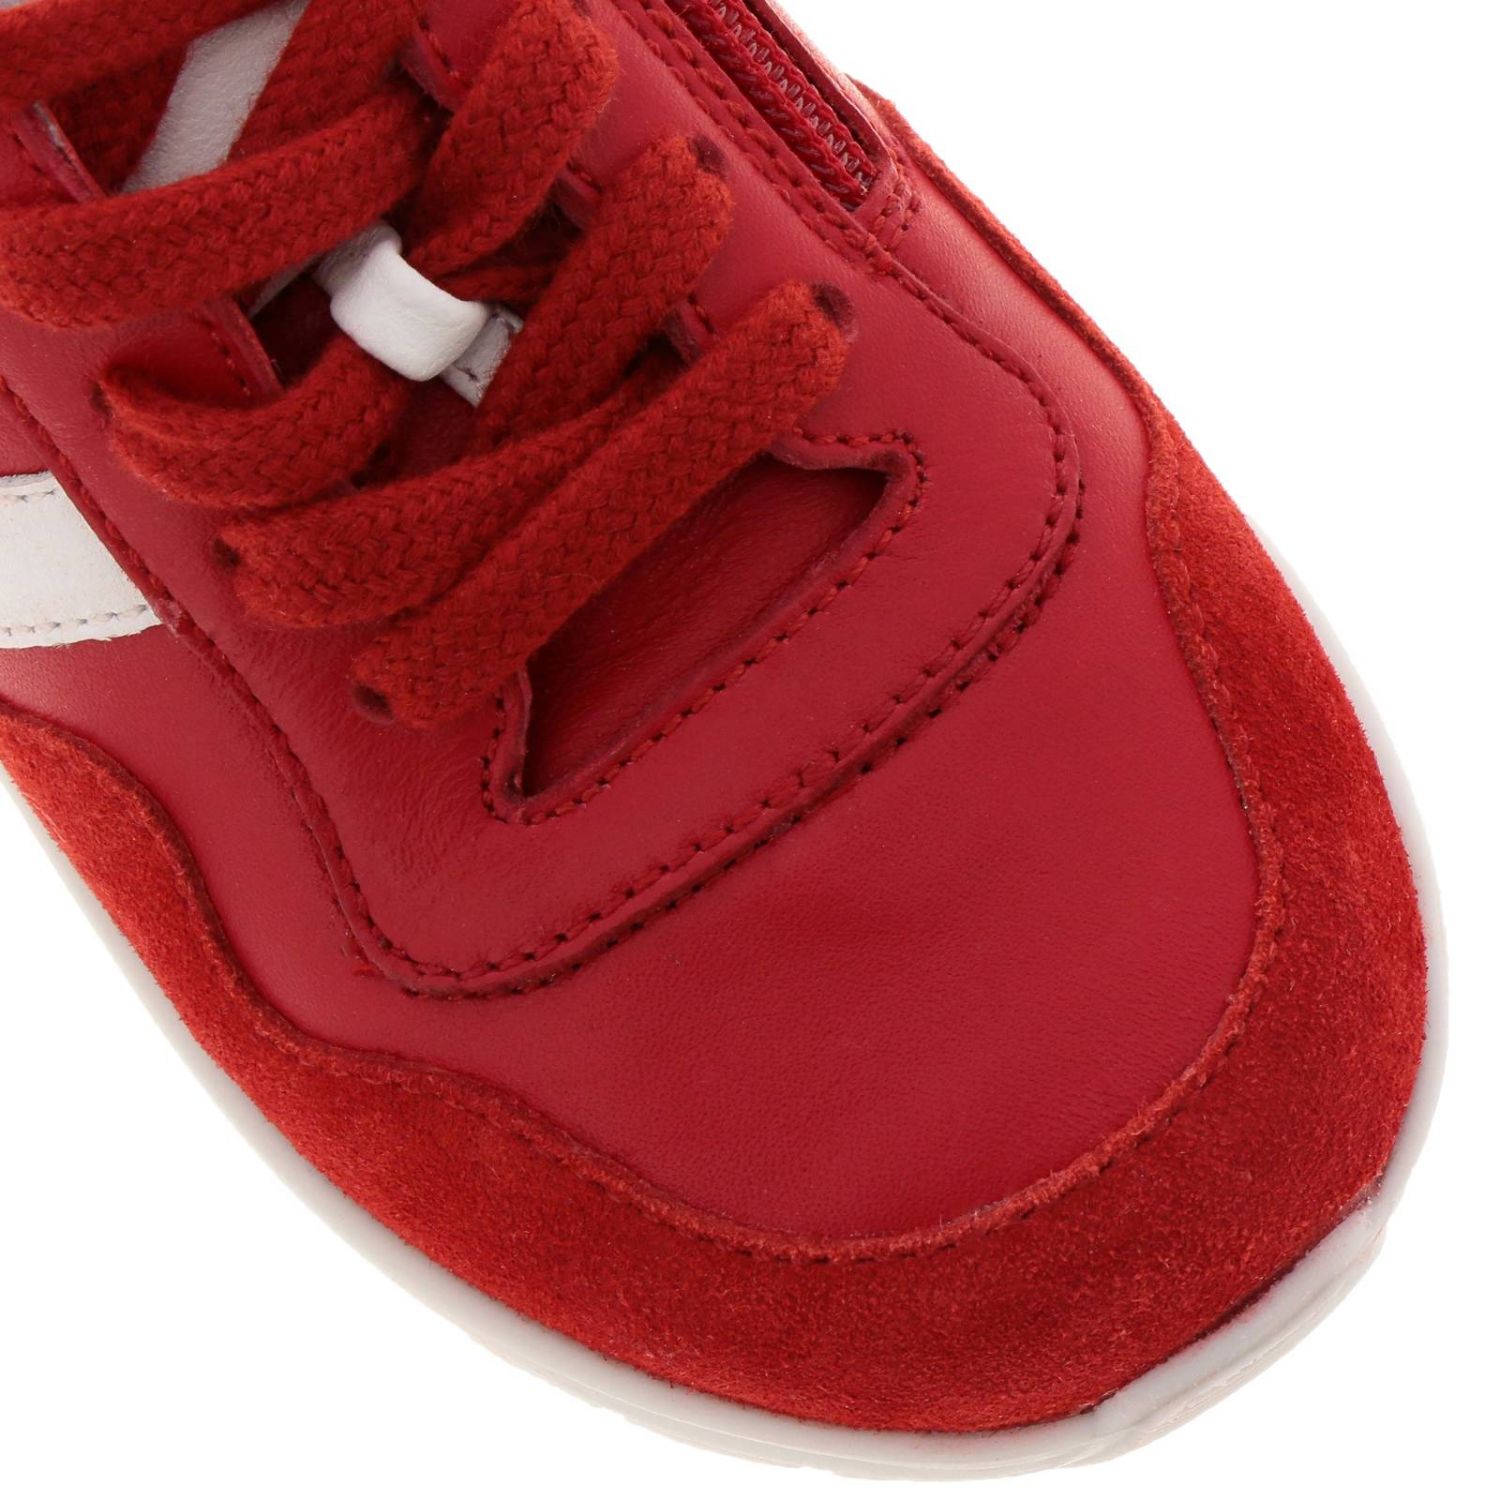 Hogan Baby Outlet: Shoes kids - Red | Shoes Hogan Baby HXT3710AP30 KK5 ...